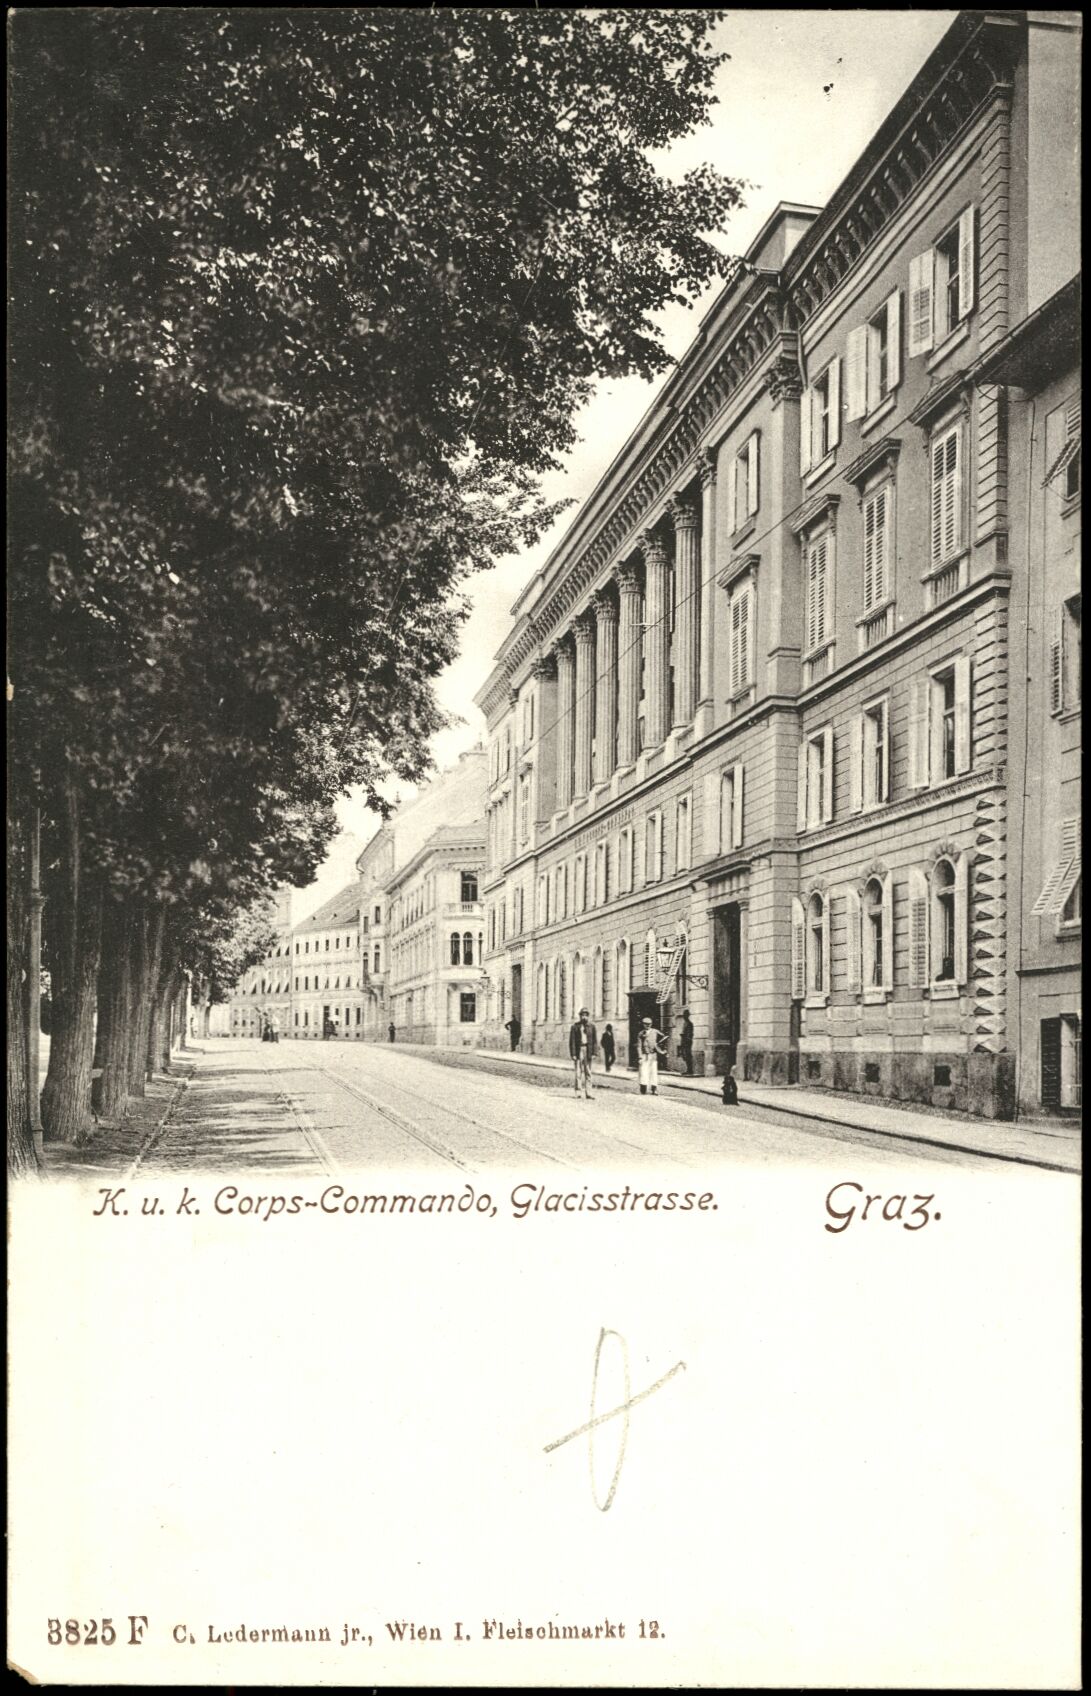 Graz, Glacisstrasse, K. u. k. Corps-Commando; vor 1905; Österreichische Nationalbibliothek. Ansichtskarten online. httpdata.onb.ac.atAKONAK054_111